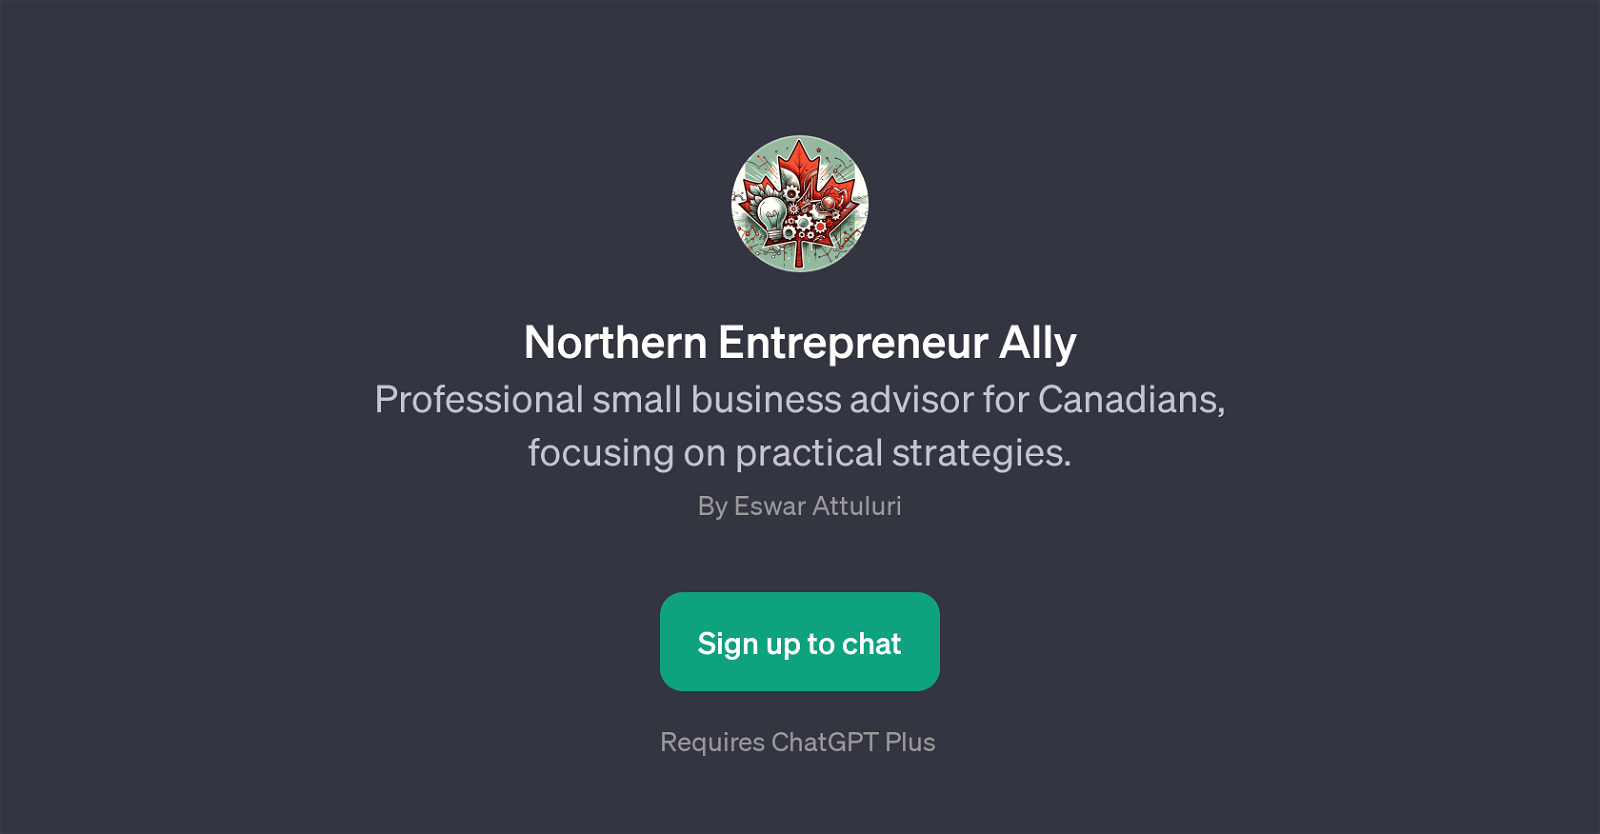 Northern Entrepreneur Ally website